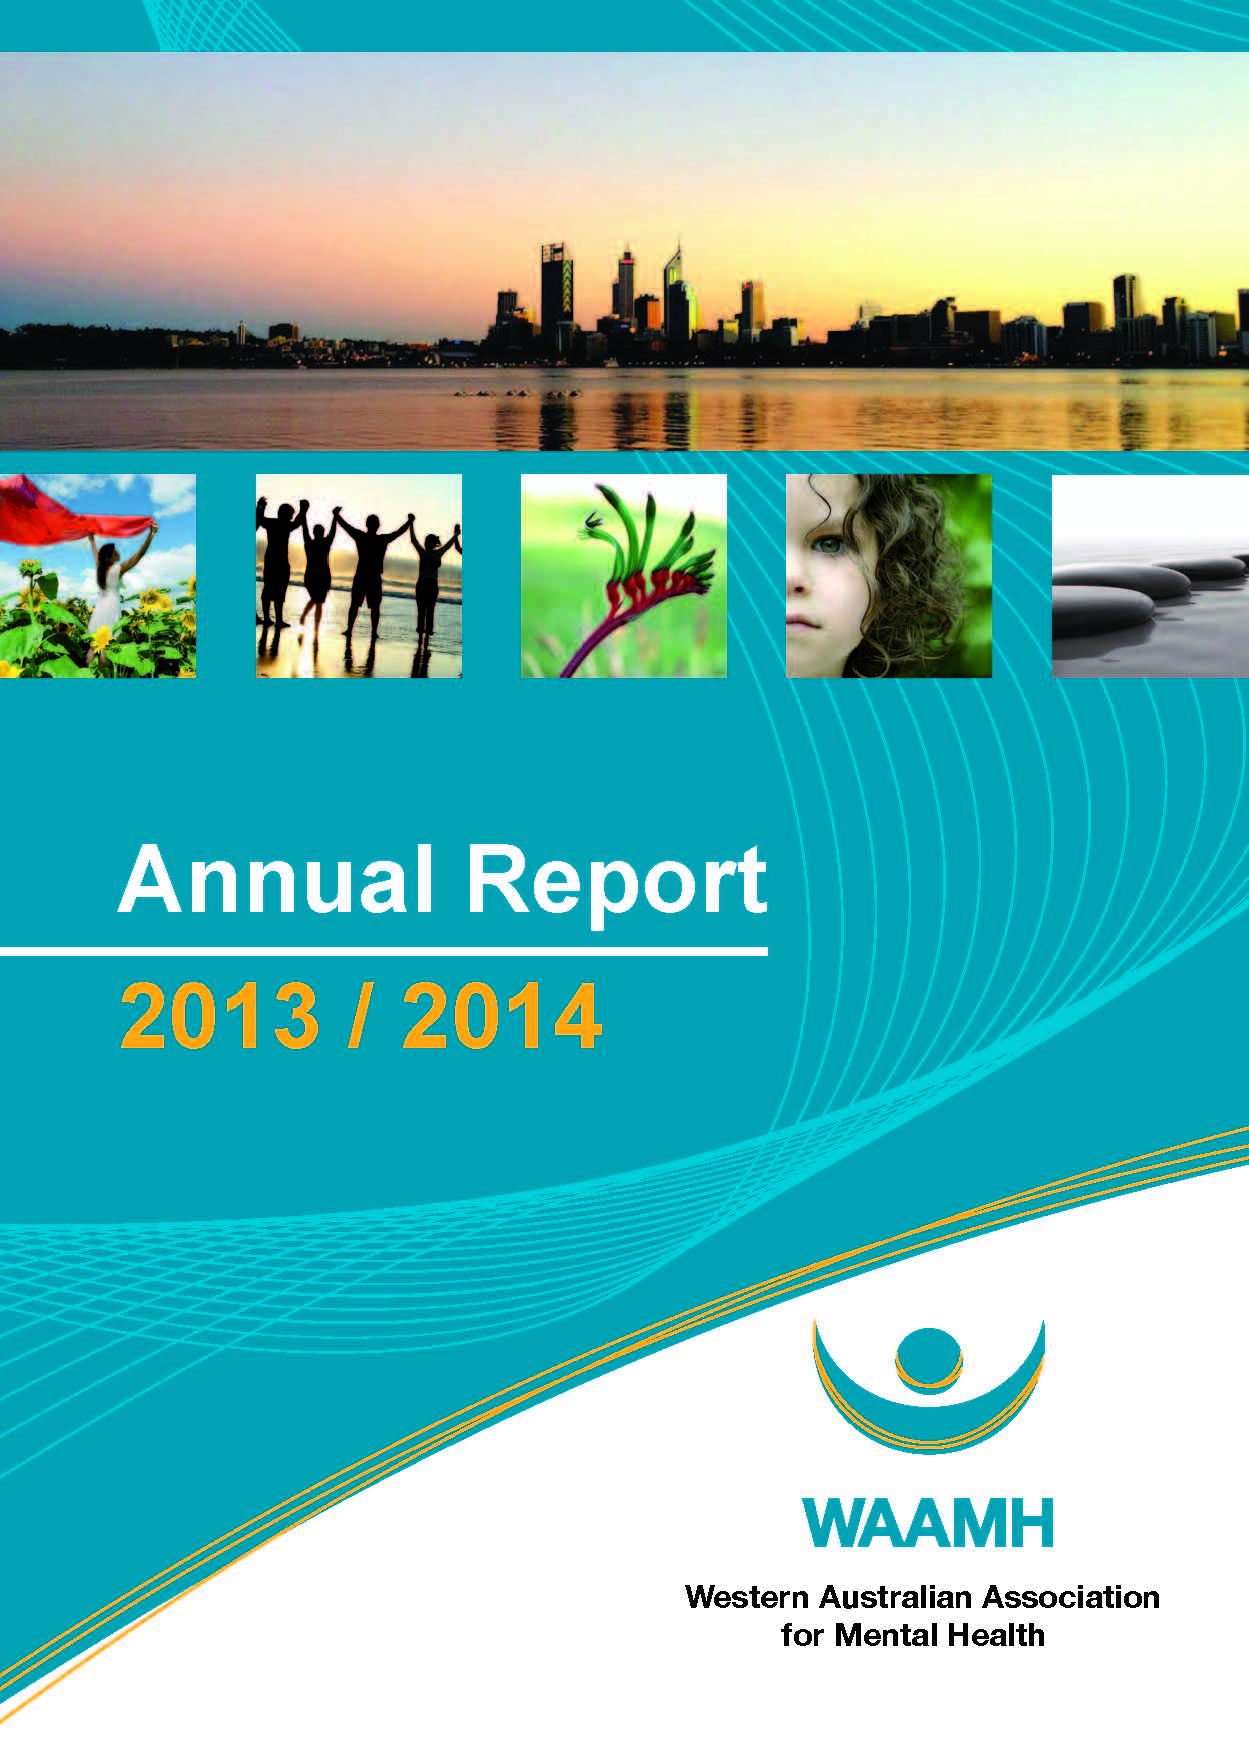 WAAMH Annual Report 2013 - 2014